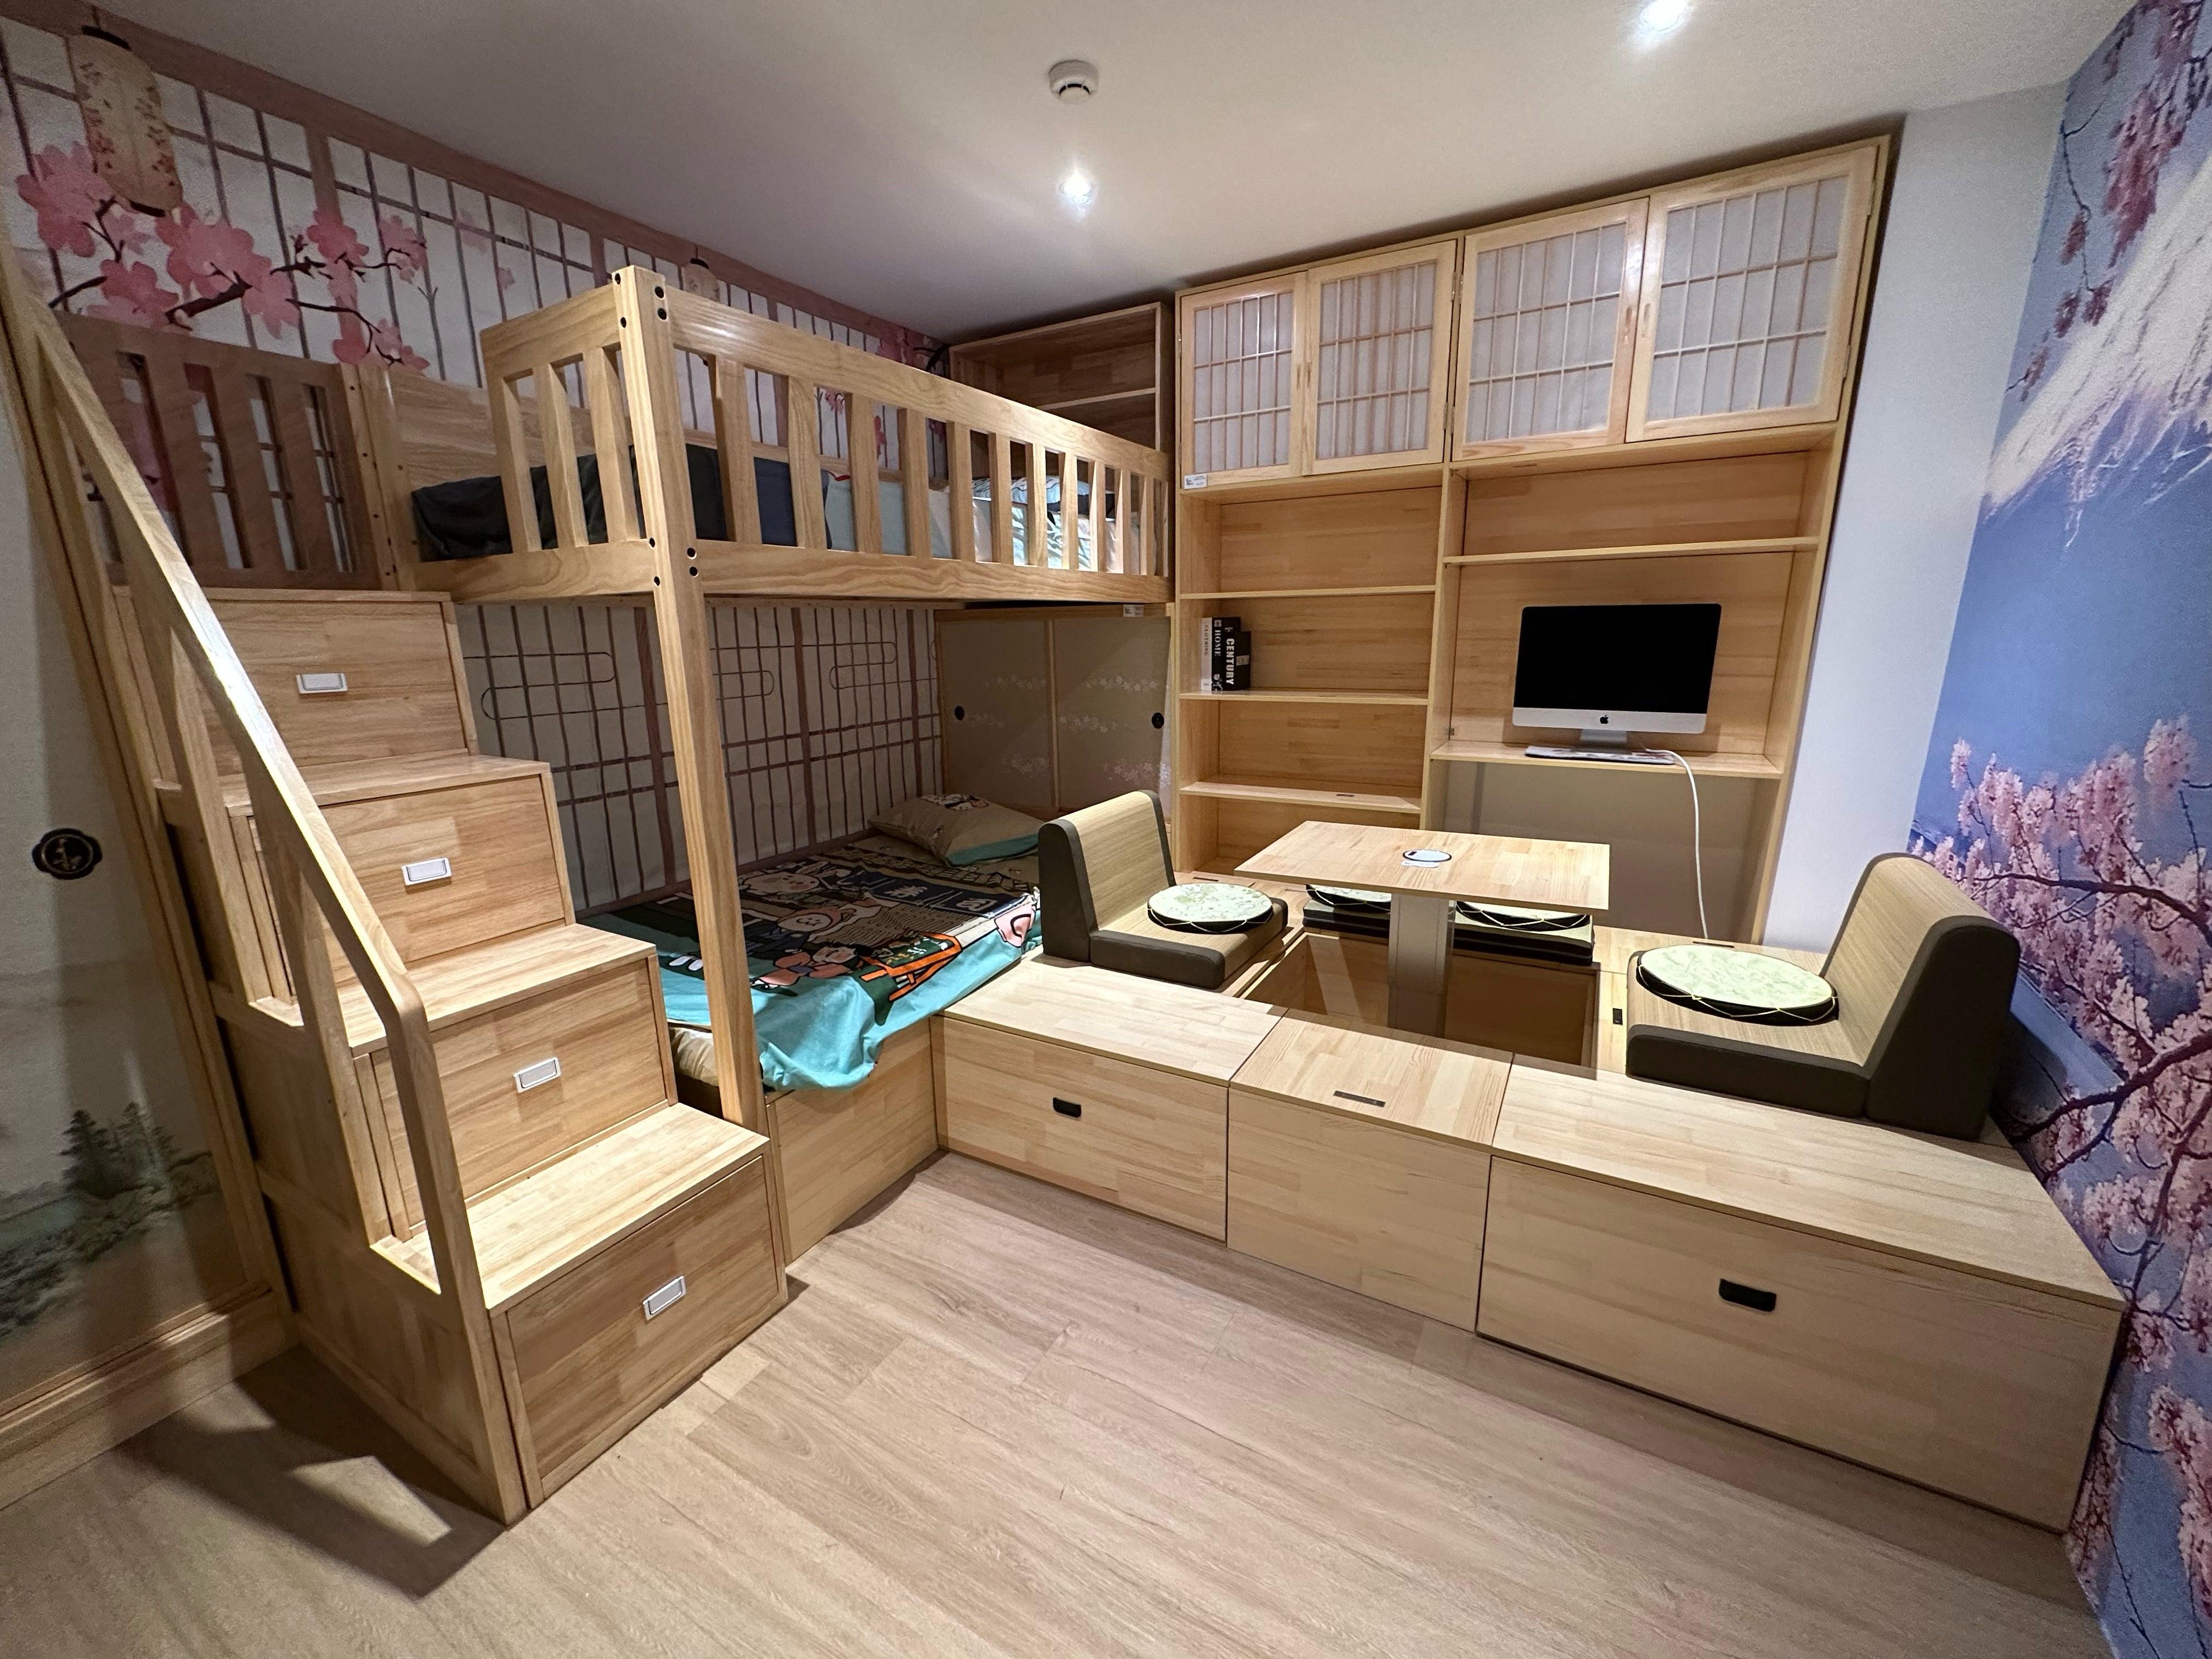 Oslo Designs Japanese Bunk Bed - Kids Haven